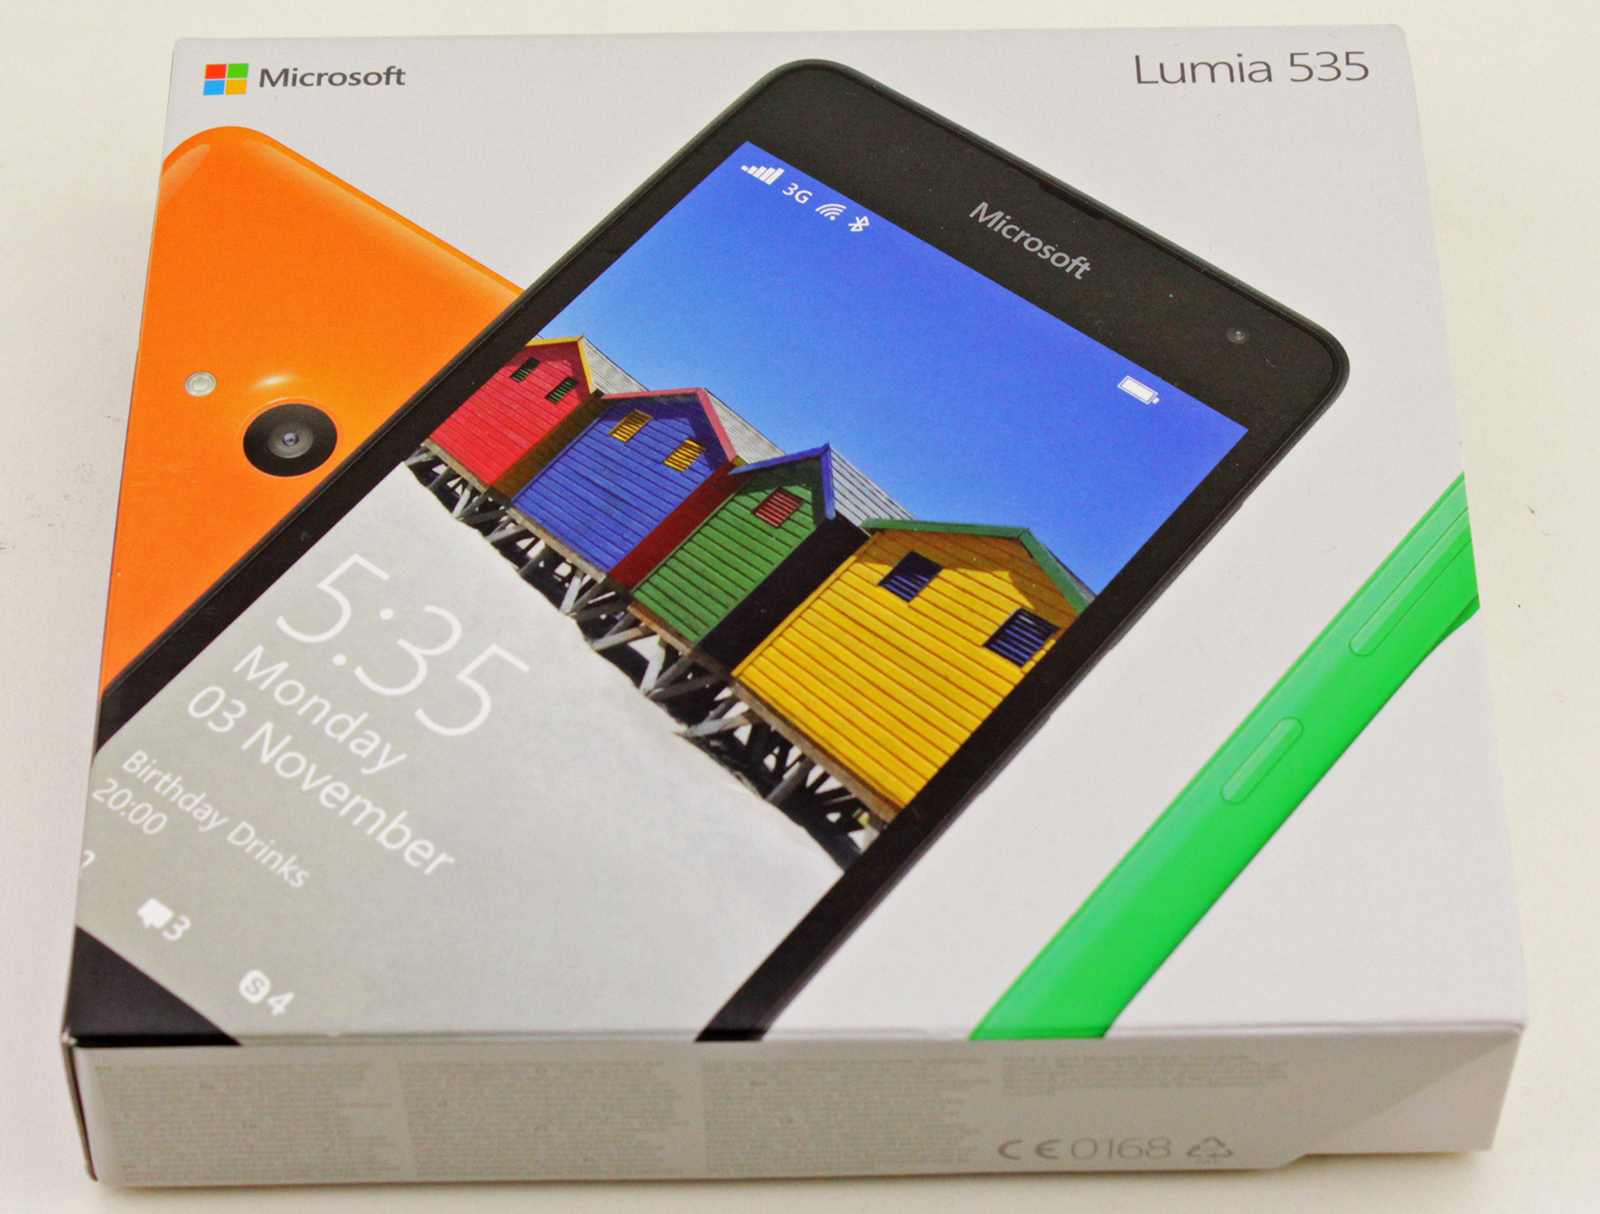 1 Lumia 535 box